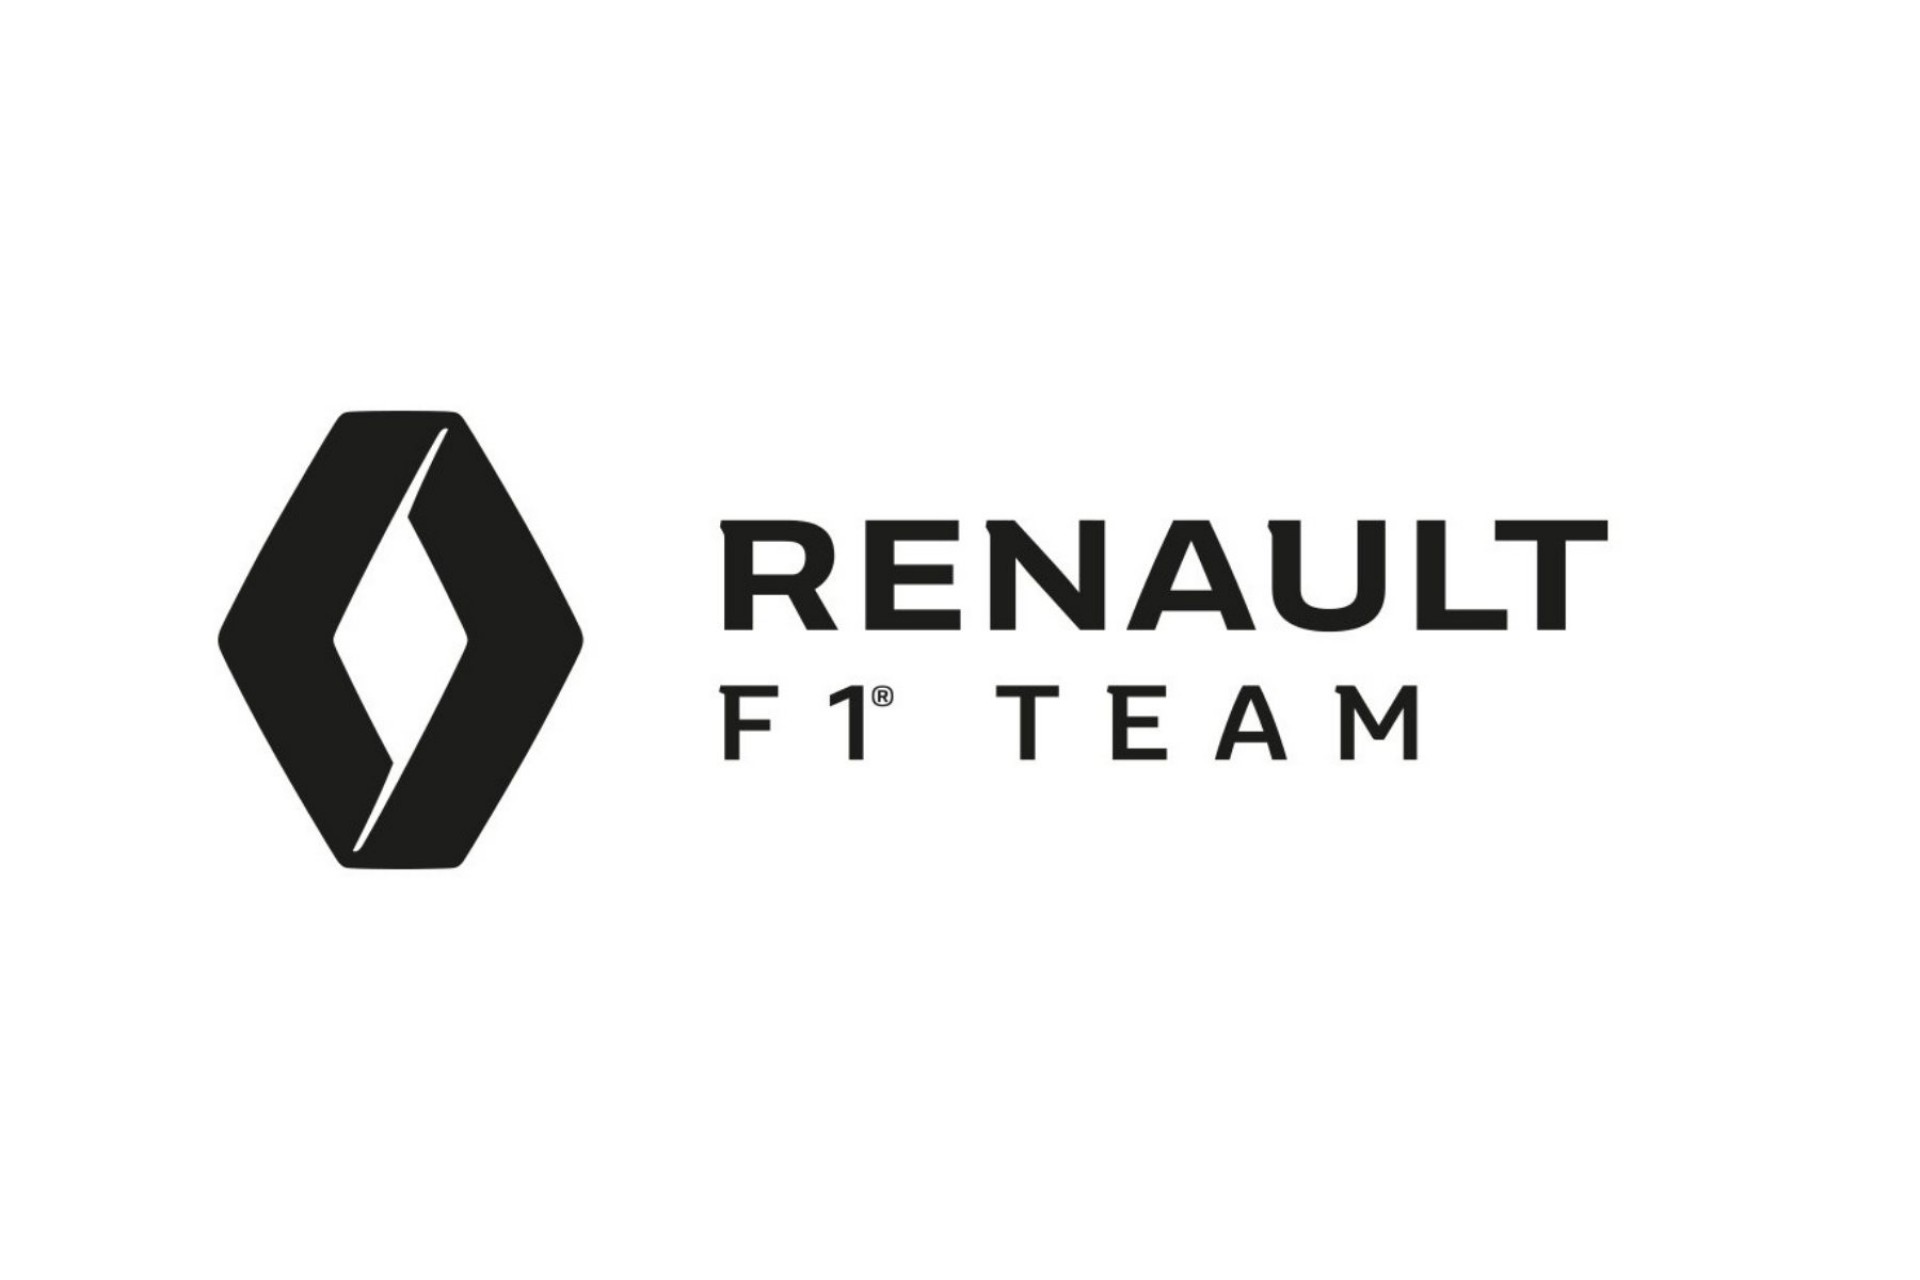 Renault f1 Team logo